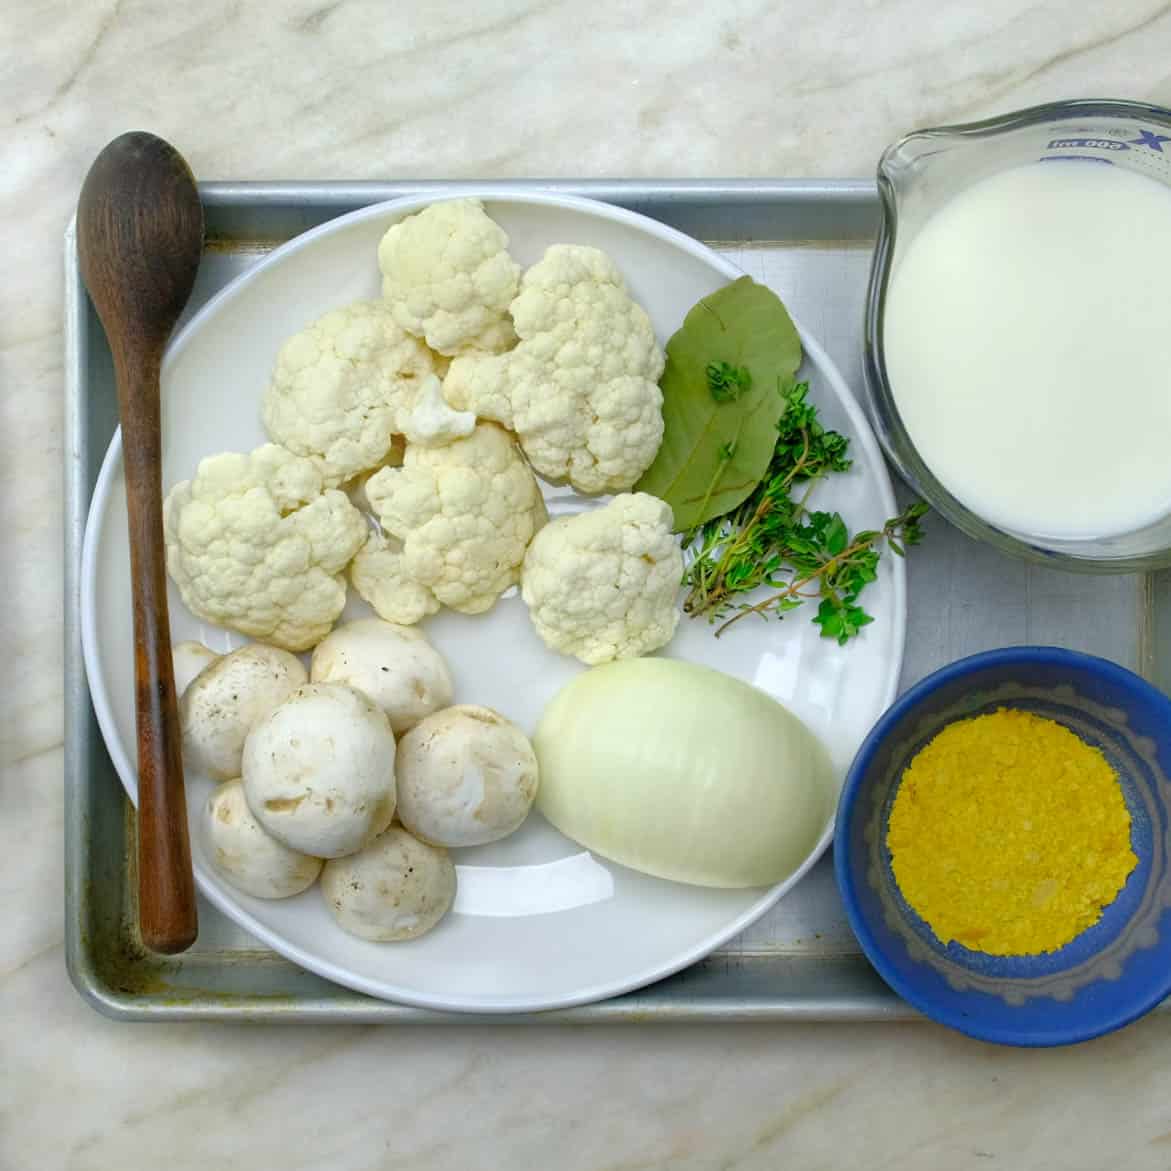 alfredo ingredients , cauliflower, onions, mushrooms, herbs, oat milk